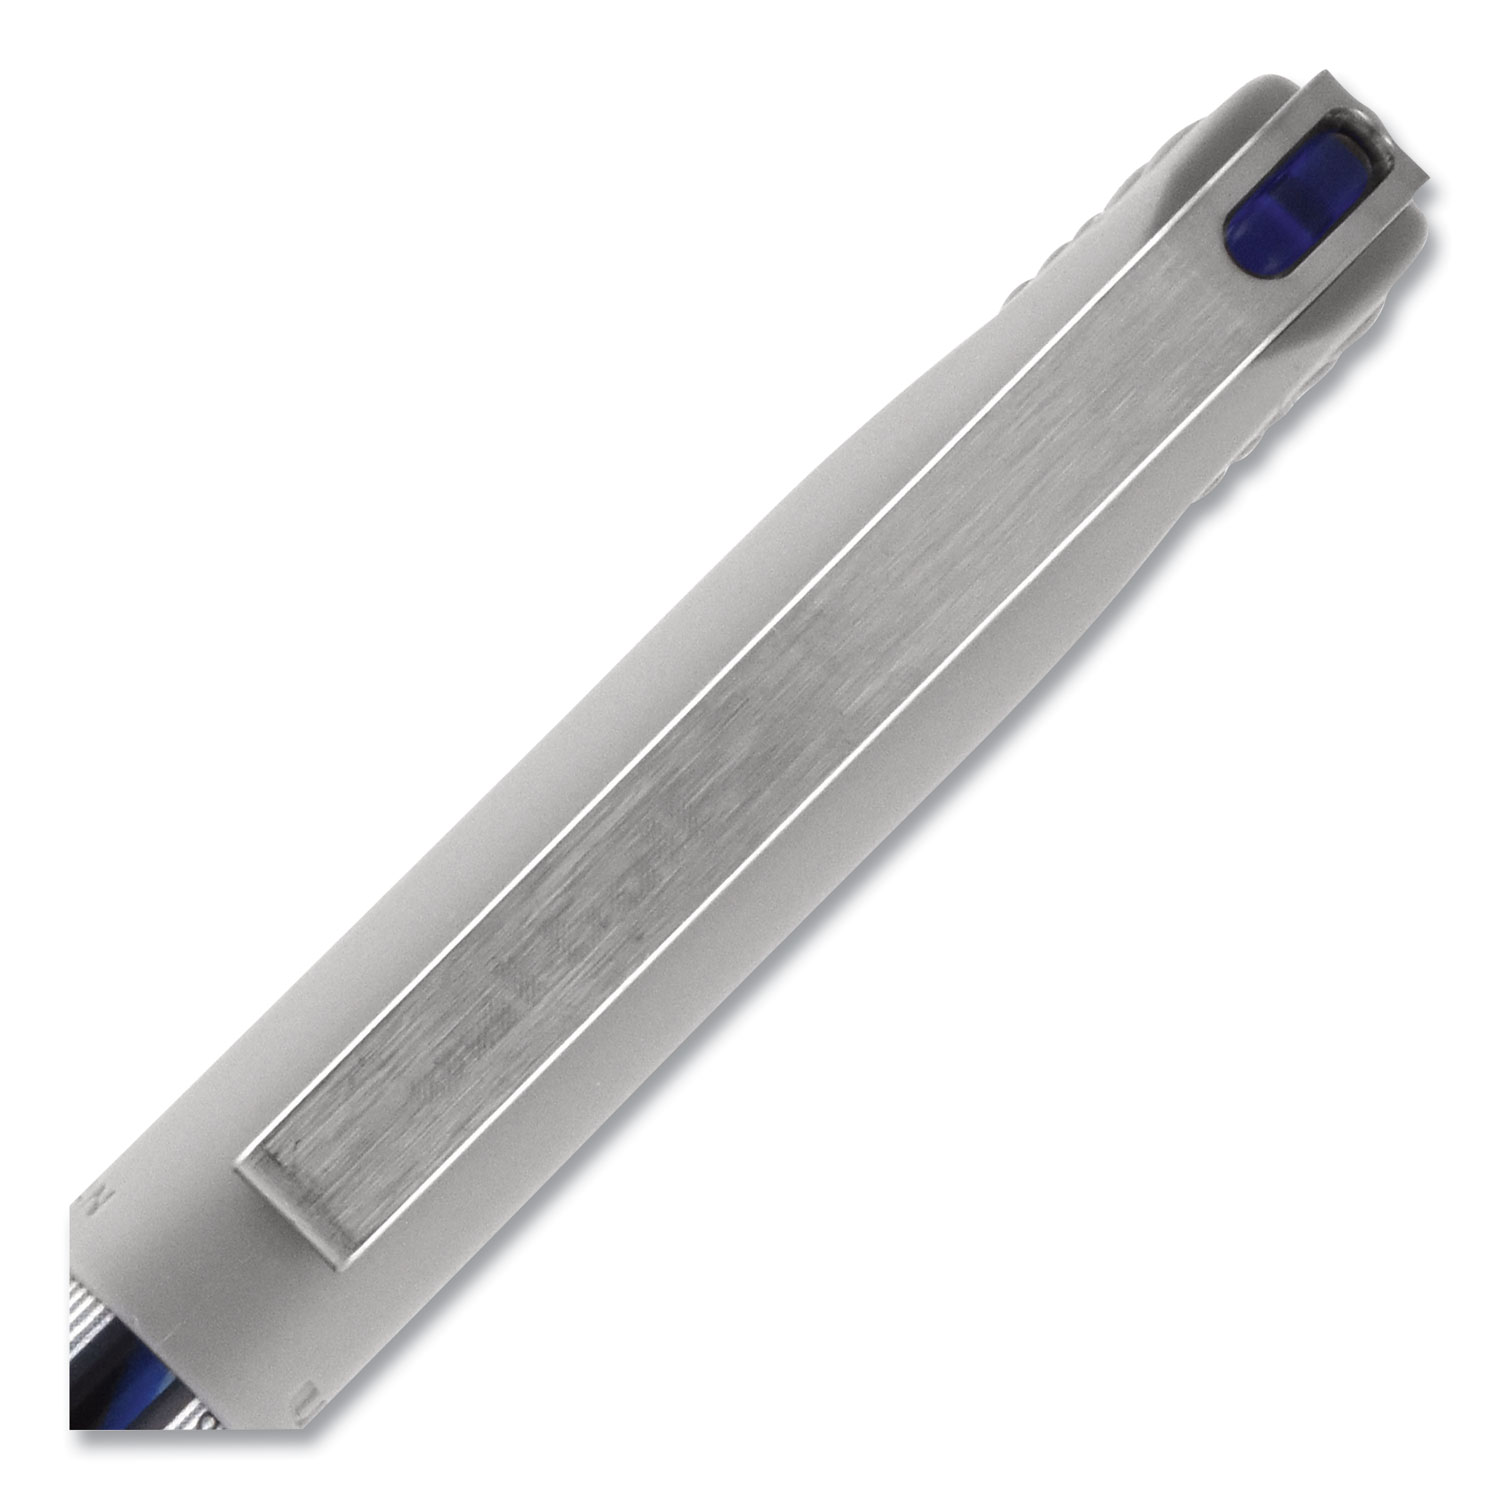 Uni-Ball Vision Roller Ball Pen Stick Fine 0.7 mm Assorted Ink and Barrel Colors Dozen